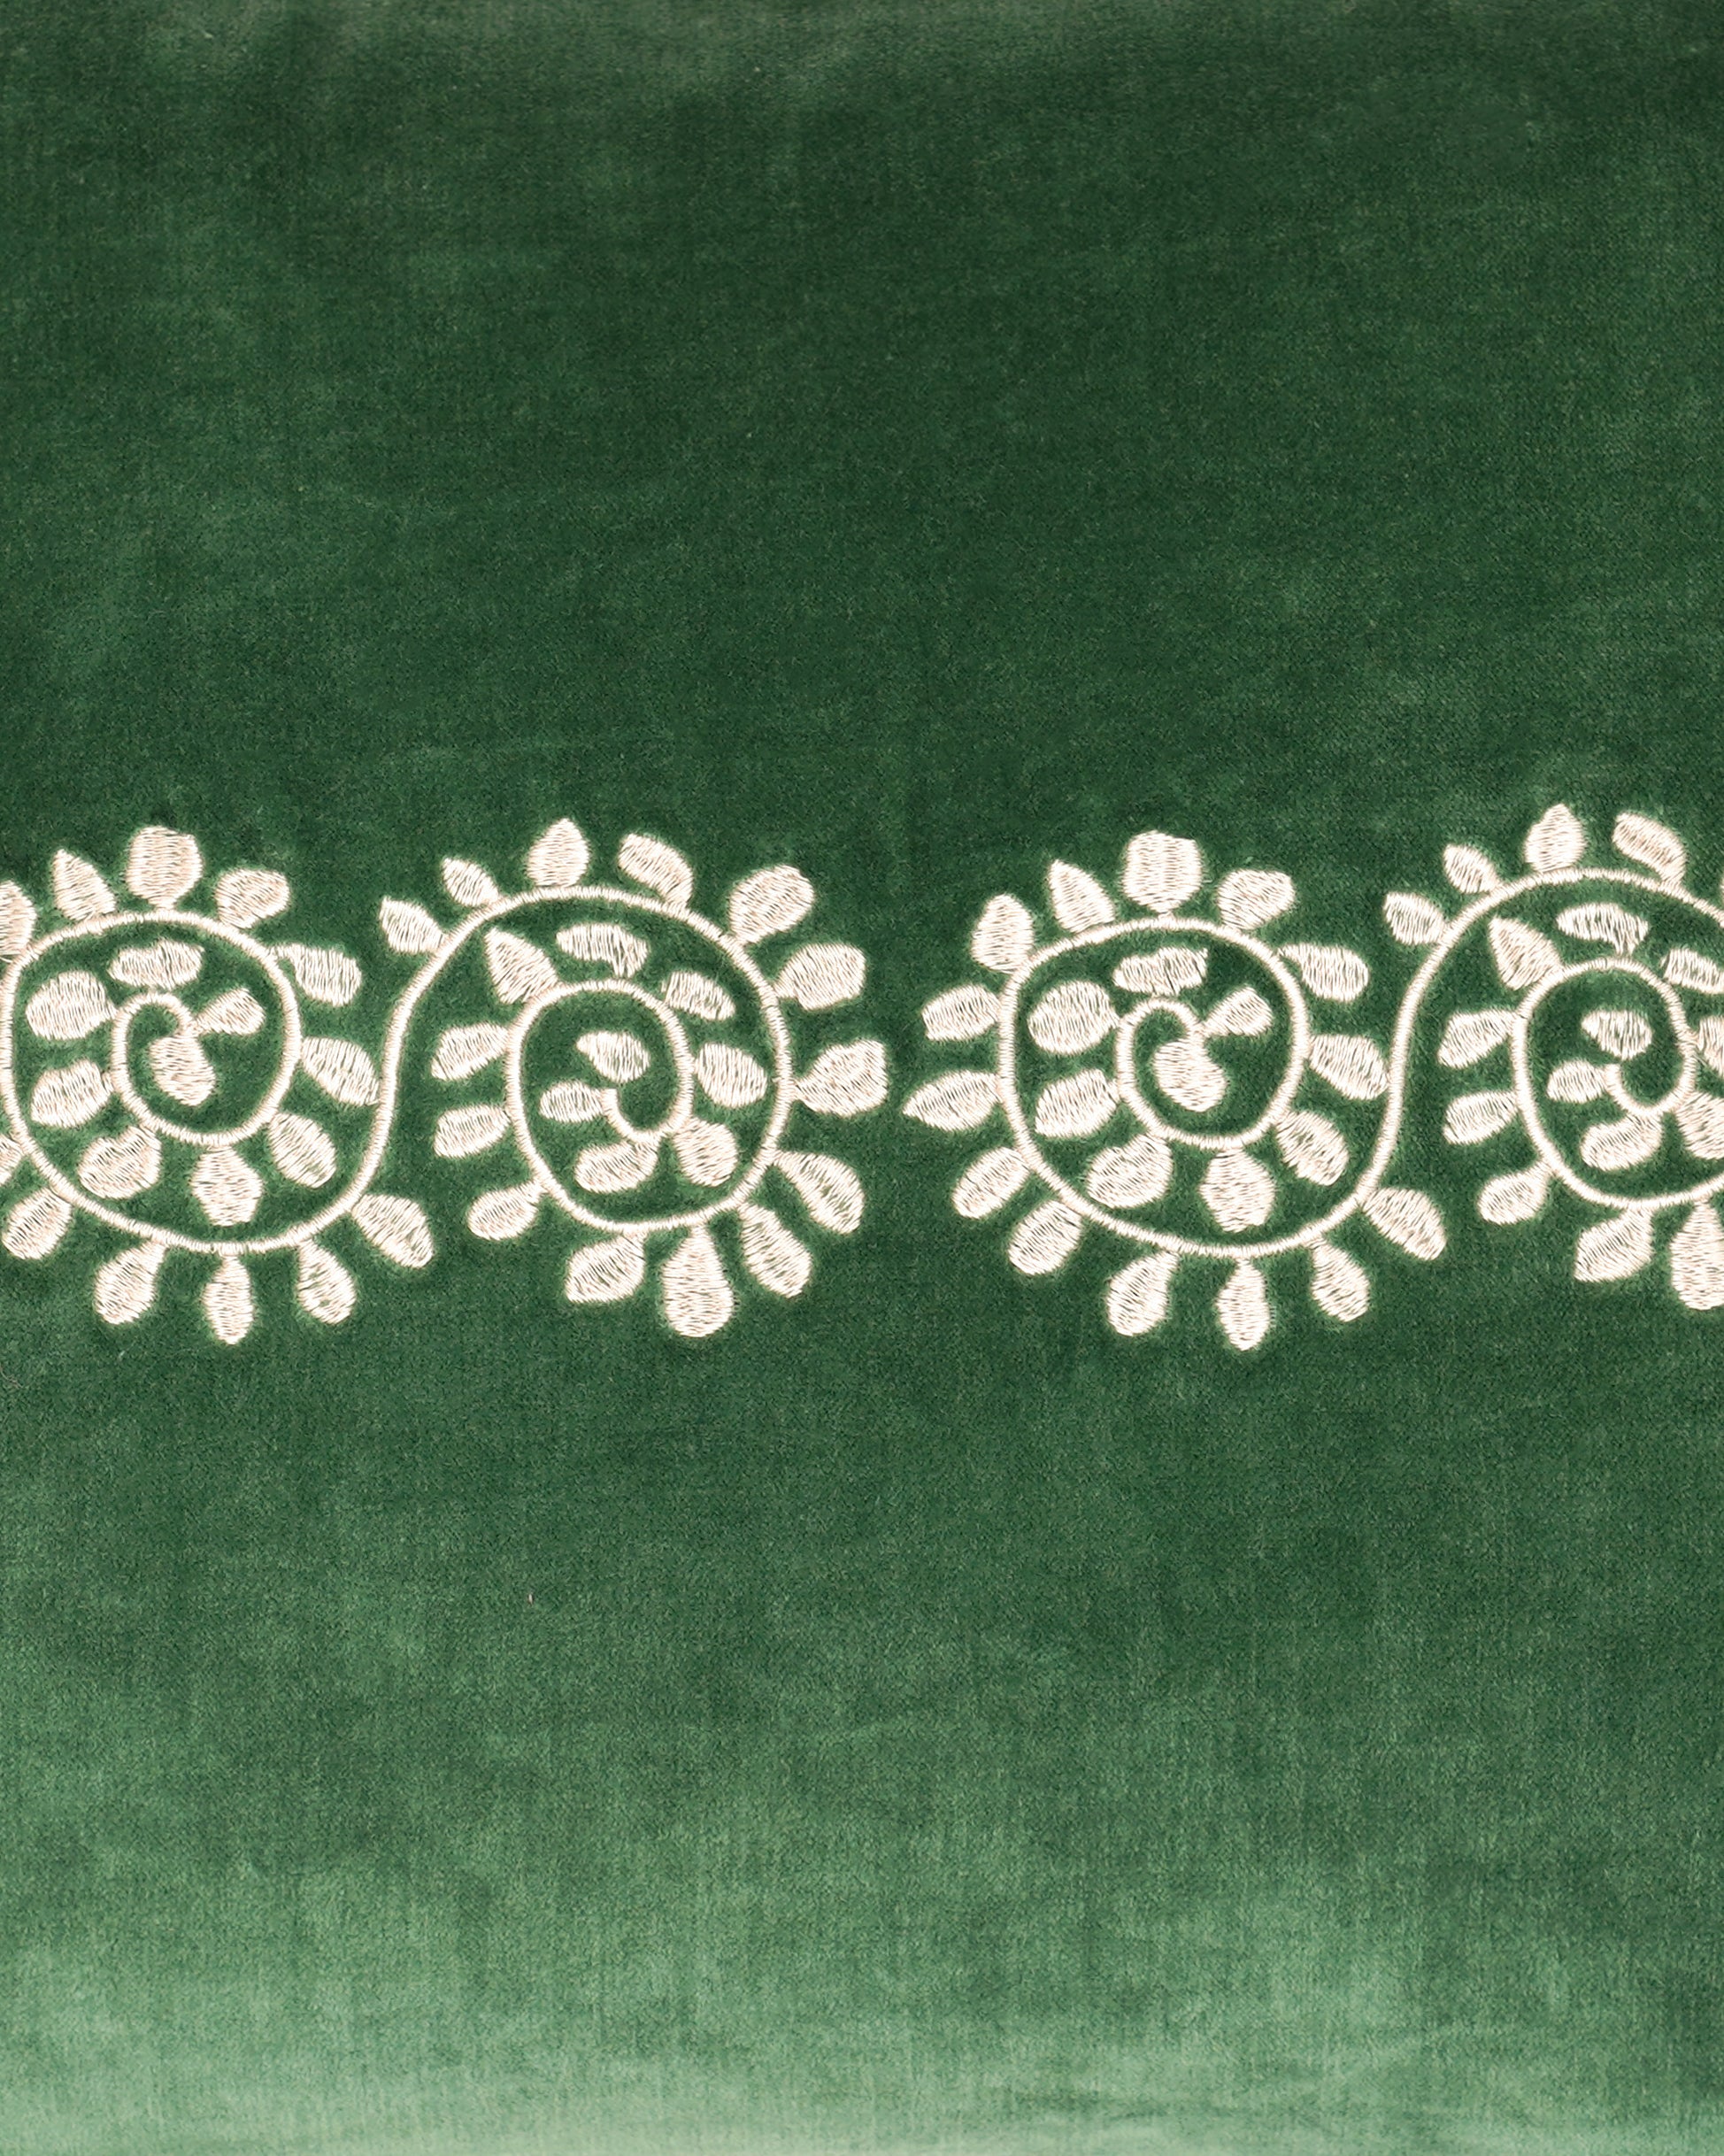 Cordoba Embroidered Velvet Cushion - Green